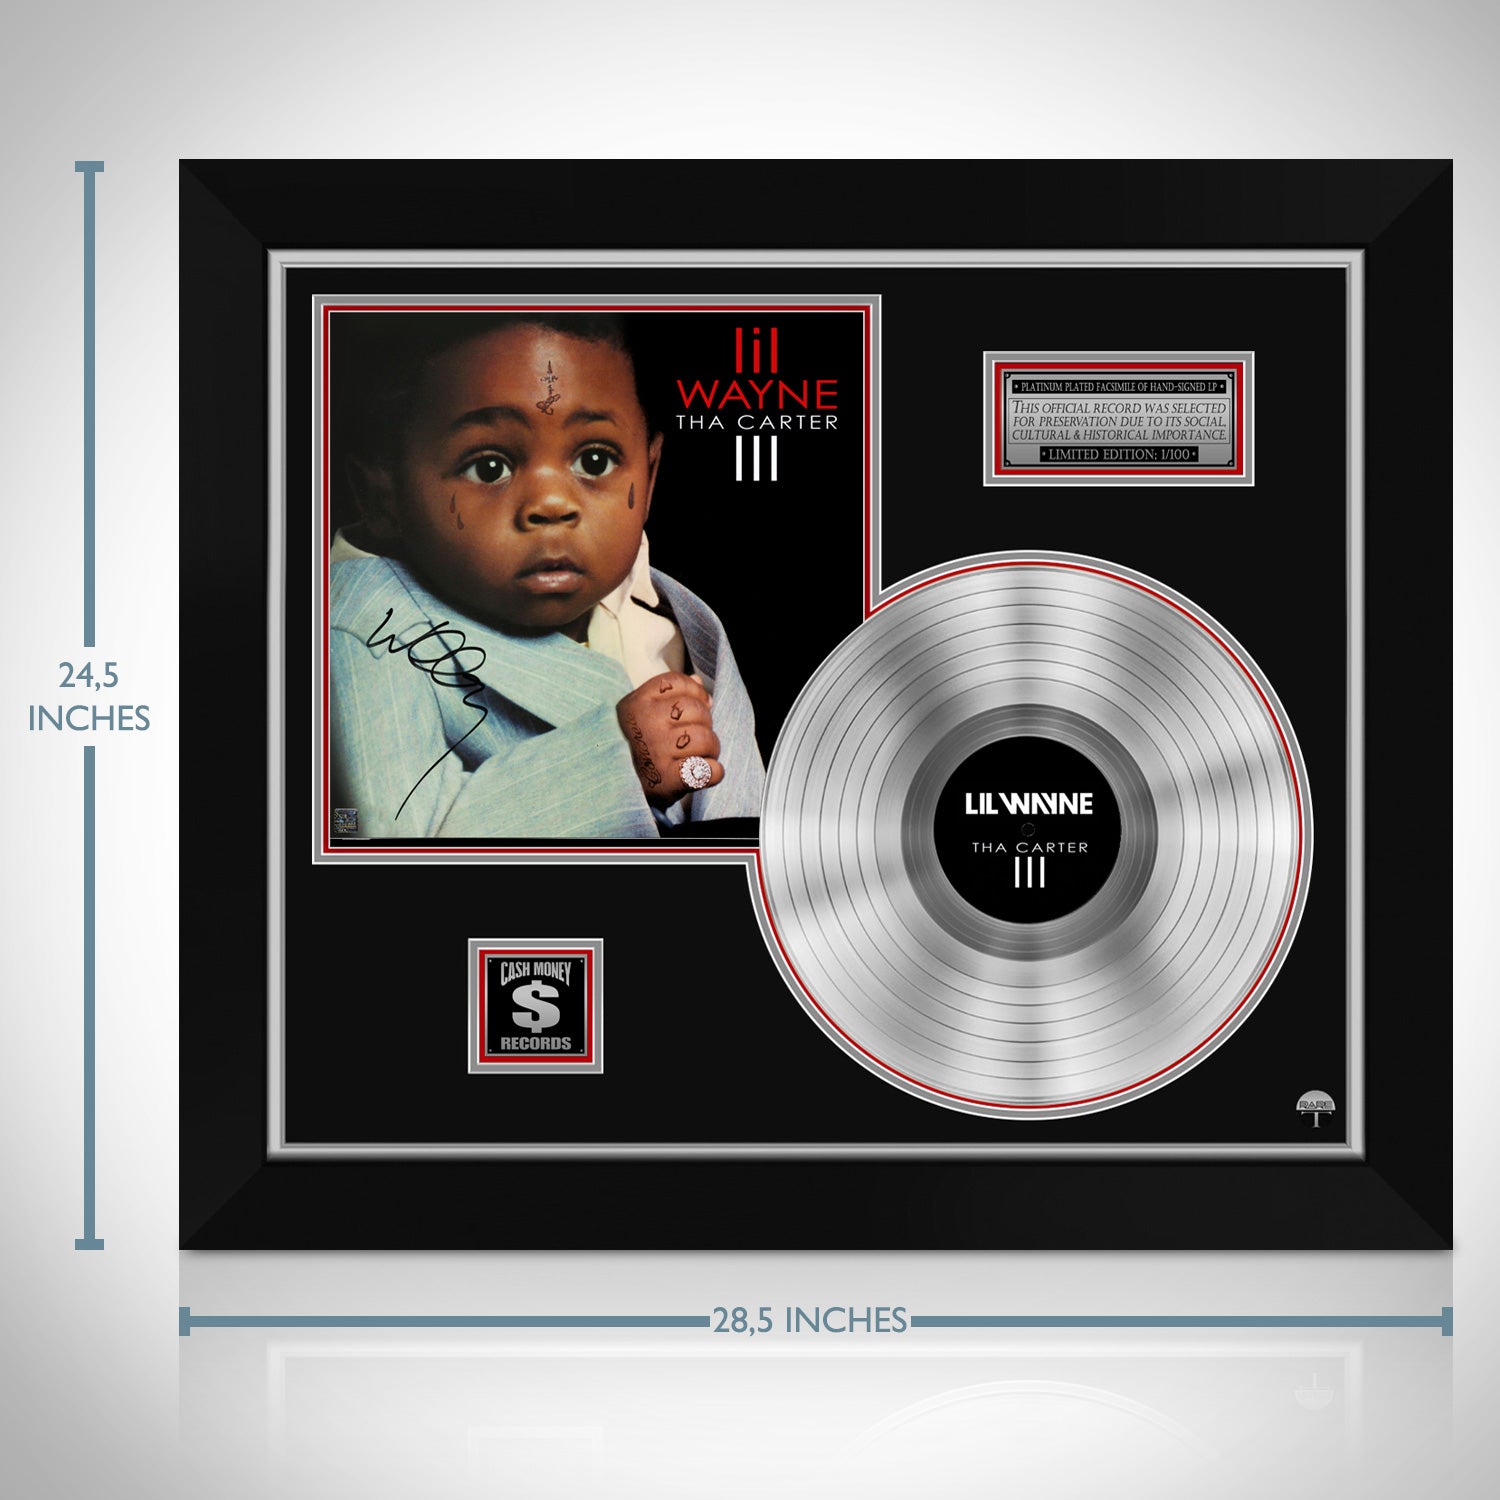 Lil Wayne - Tha Carter III Platinum LP Limited Signature Edition 